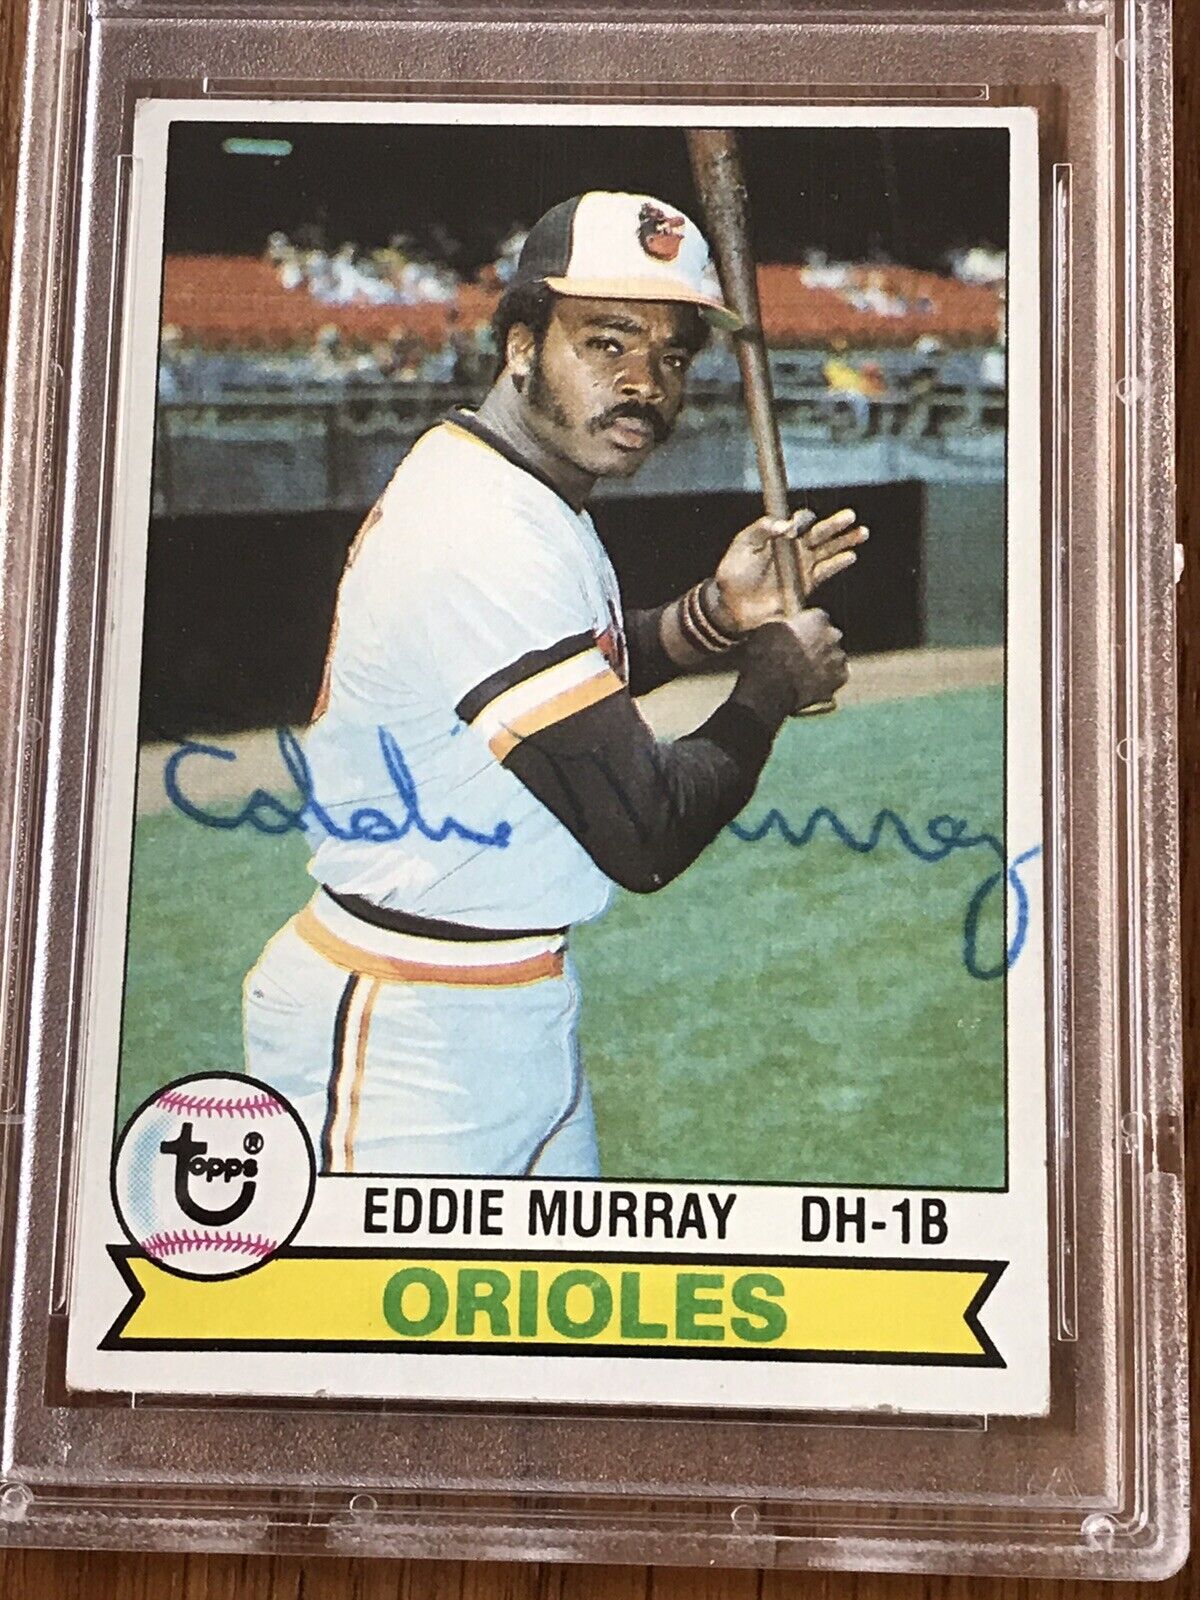 Top Eddie Murray Baseball Cards, Vintage, Rookies, Autographs